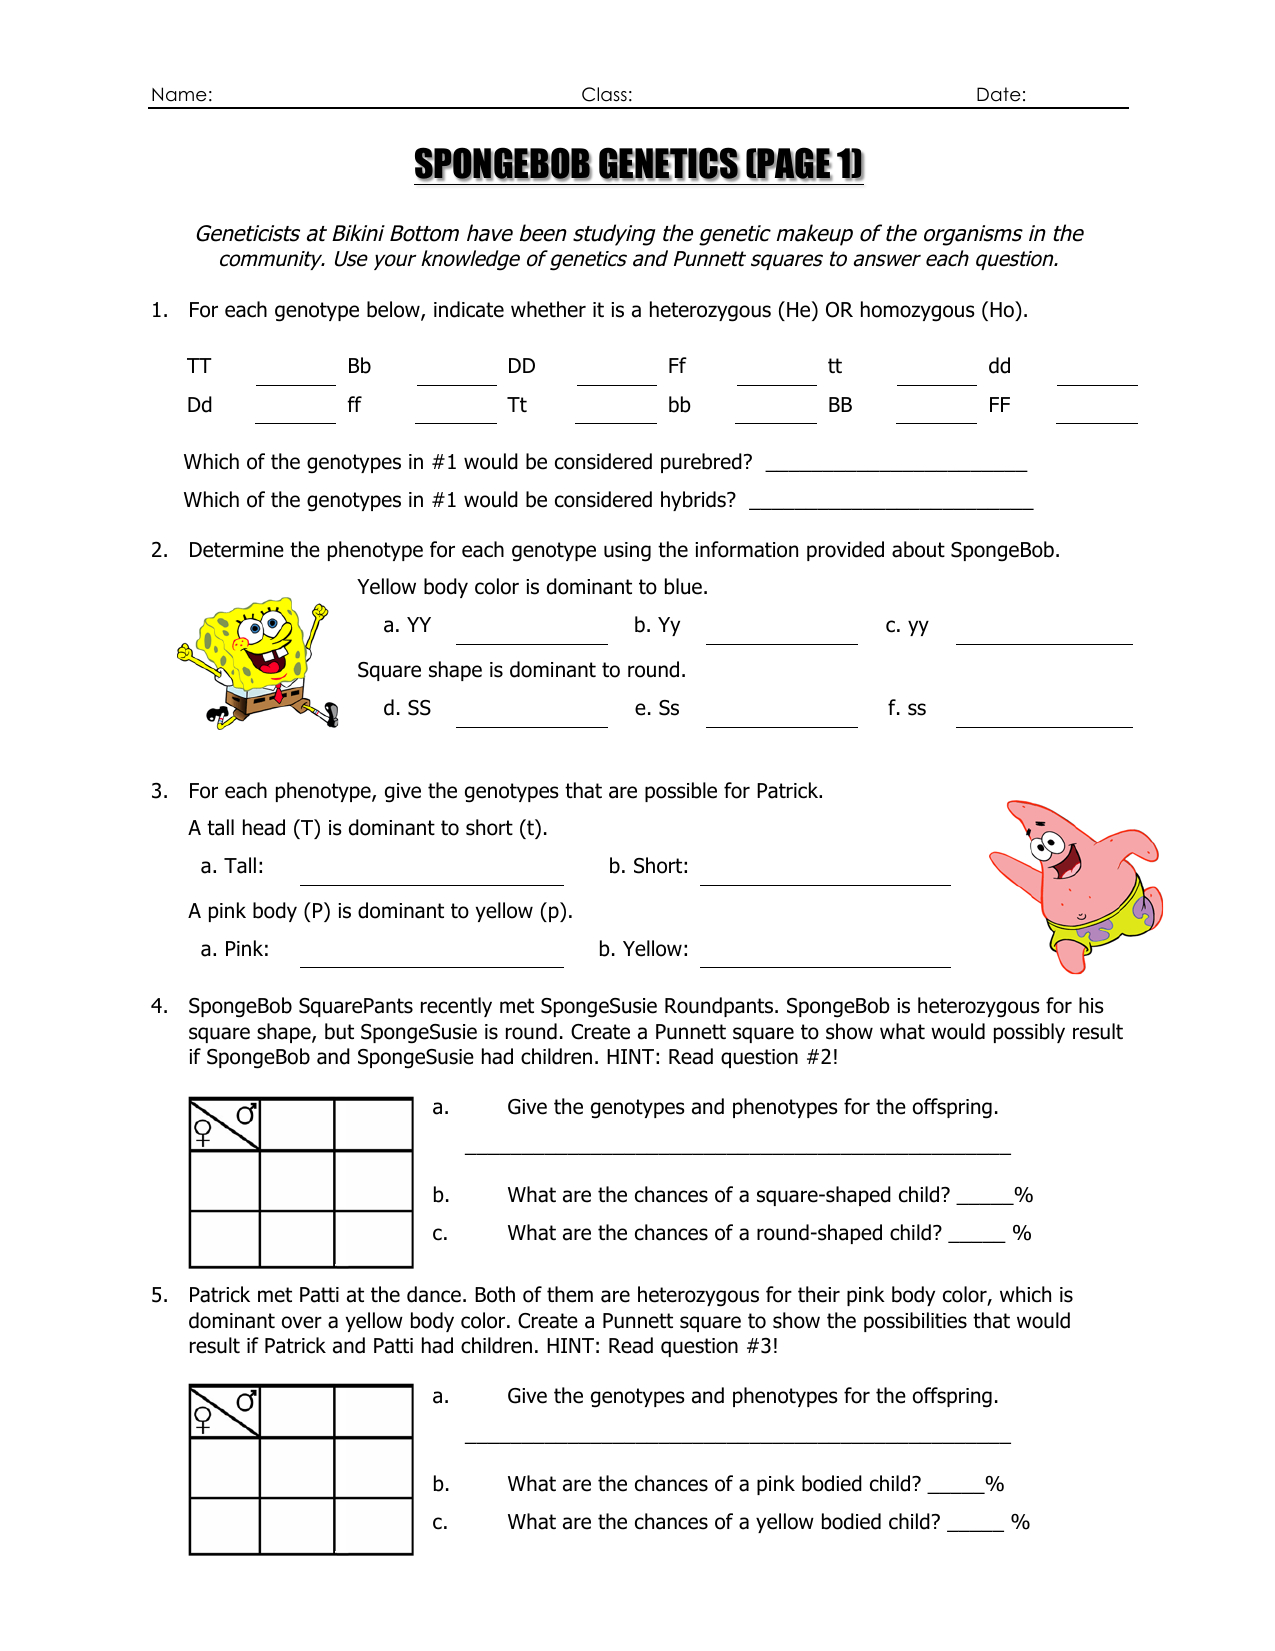 Spongebob Genetics Page 1 For Spongebob Genotype Worksheet Answers